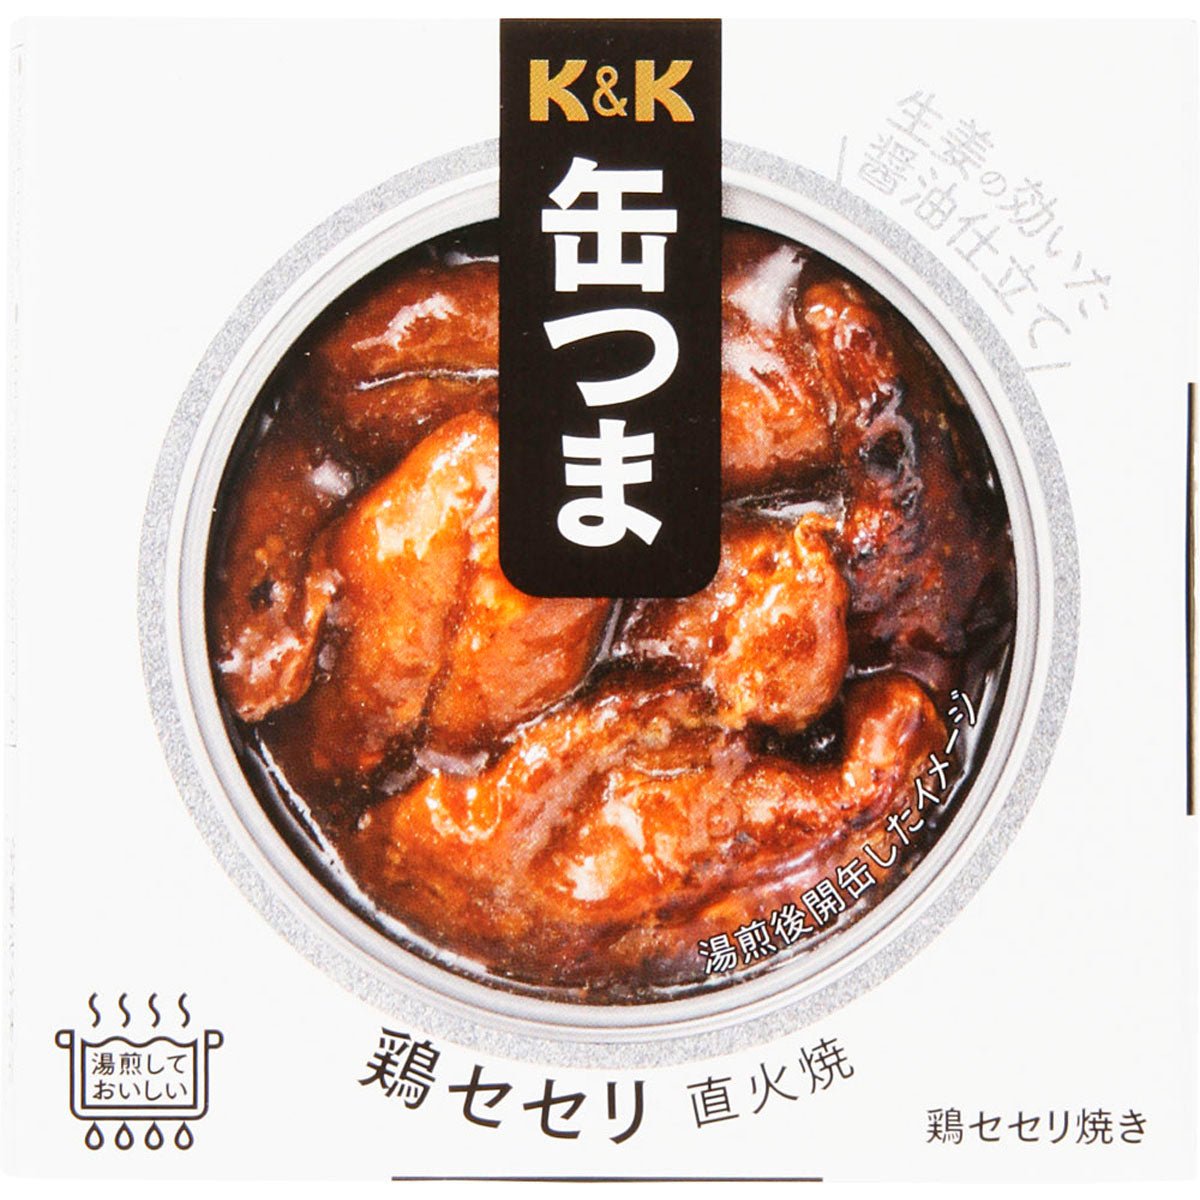 K&K Vendedor de pollo con huevo enlatado Firewaki directo